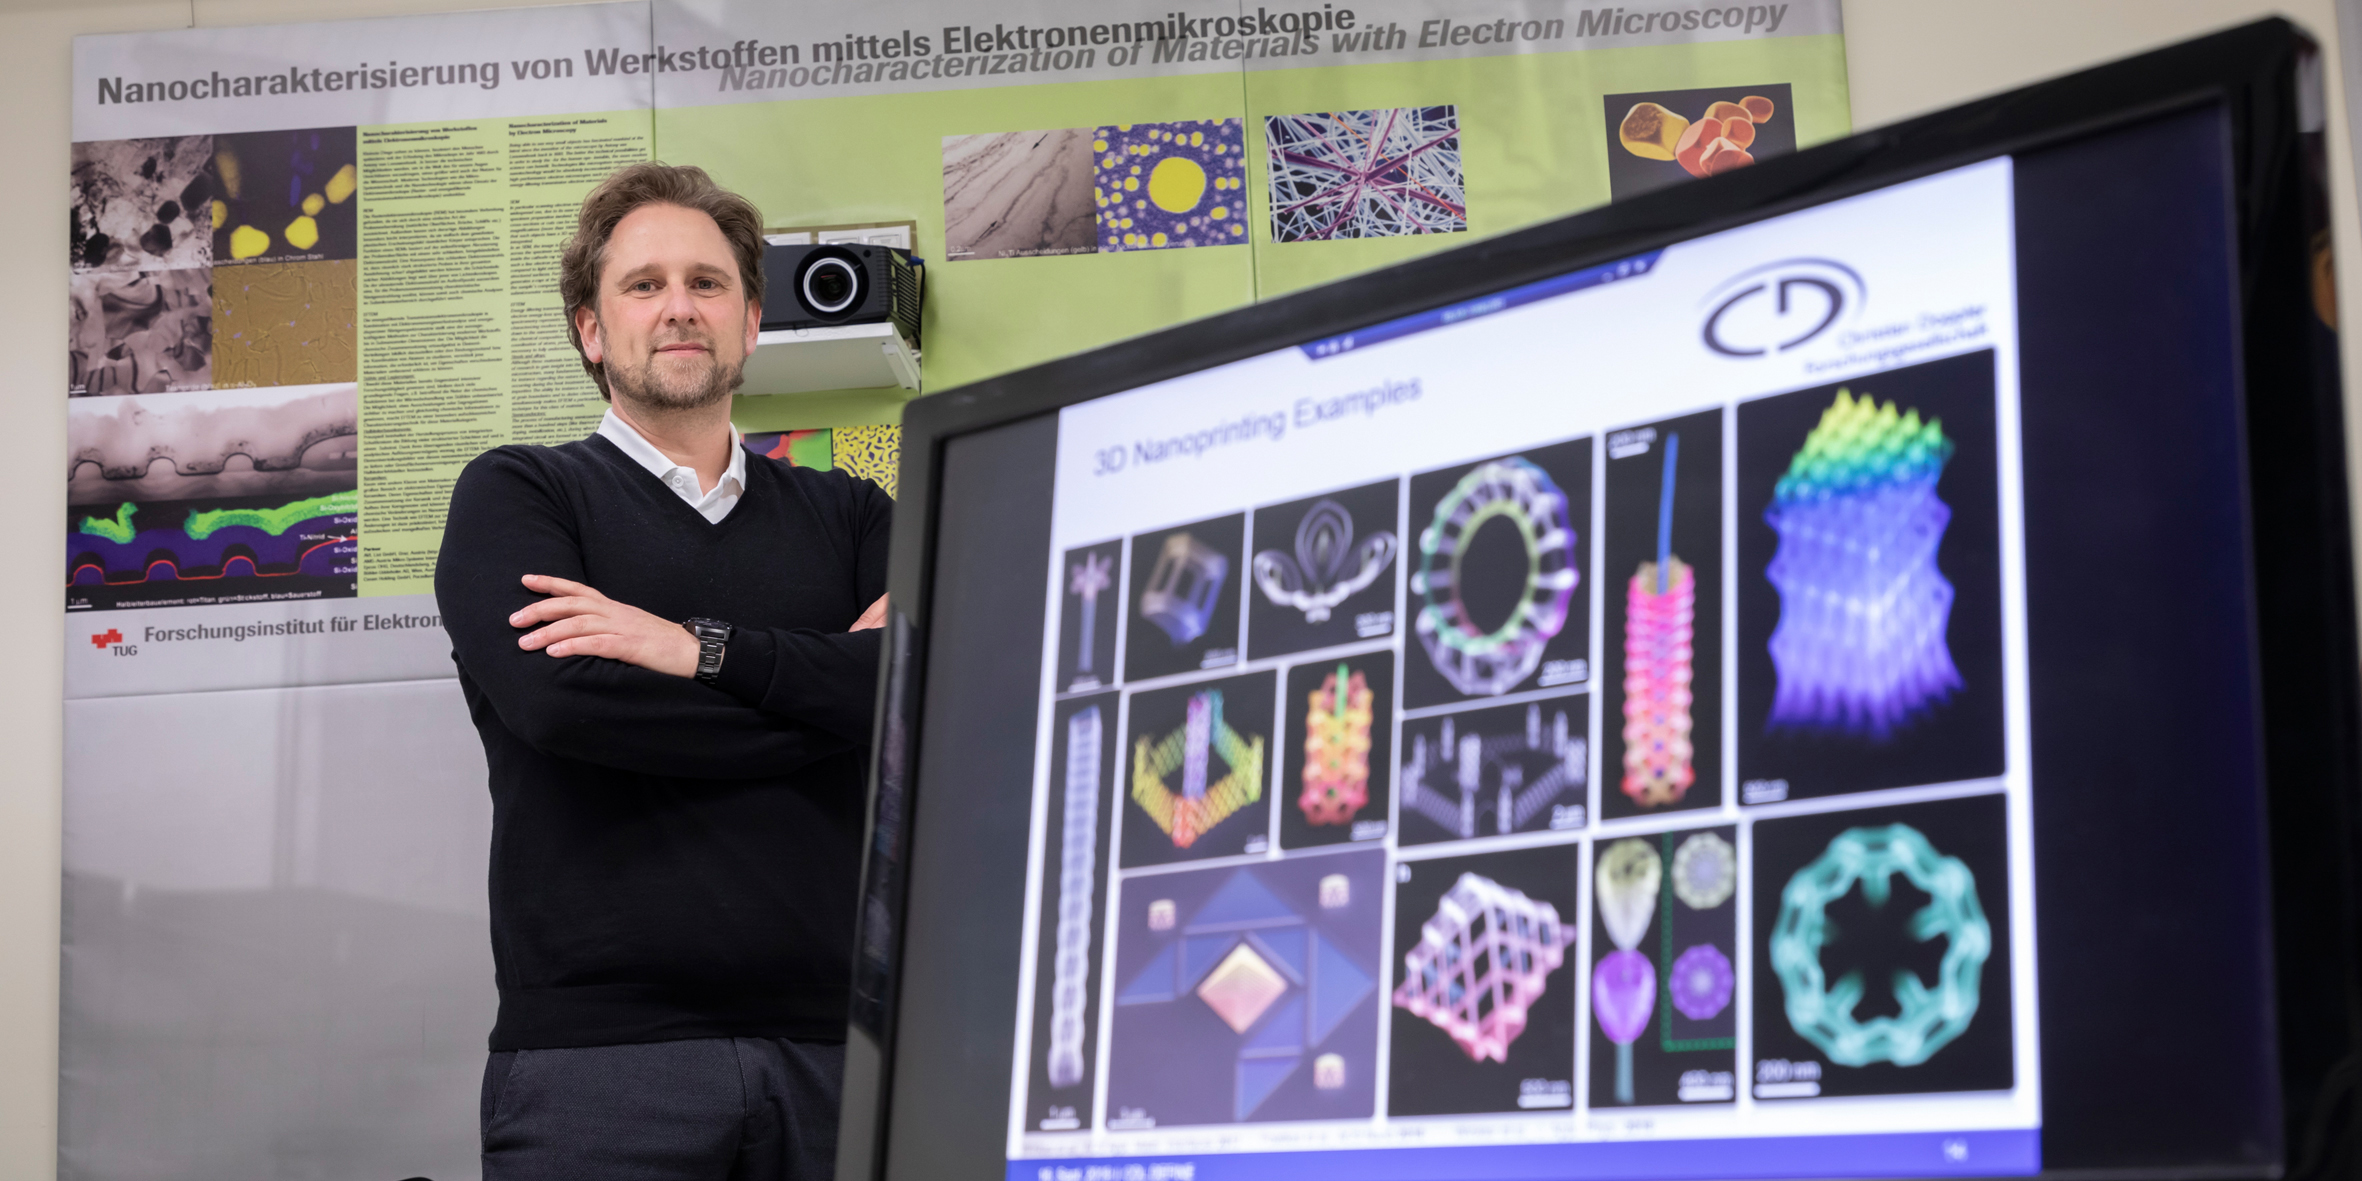 TU Graz researcher stands behind computer screen